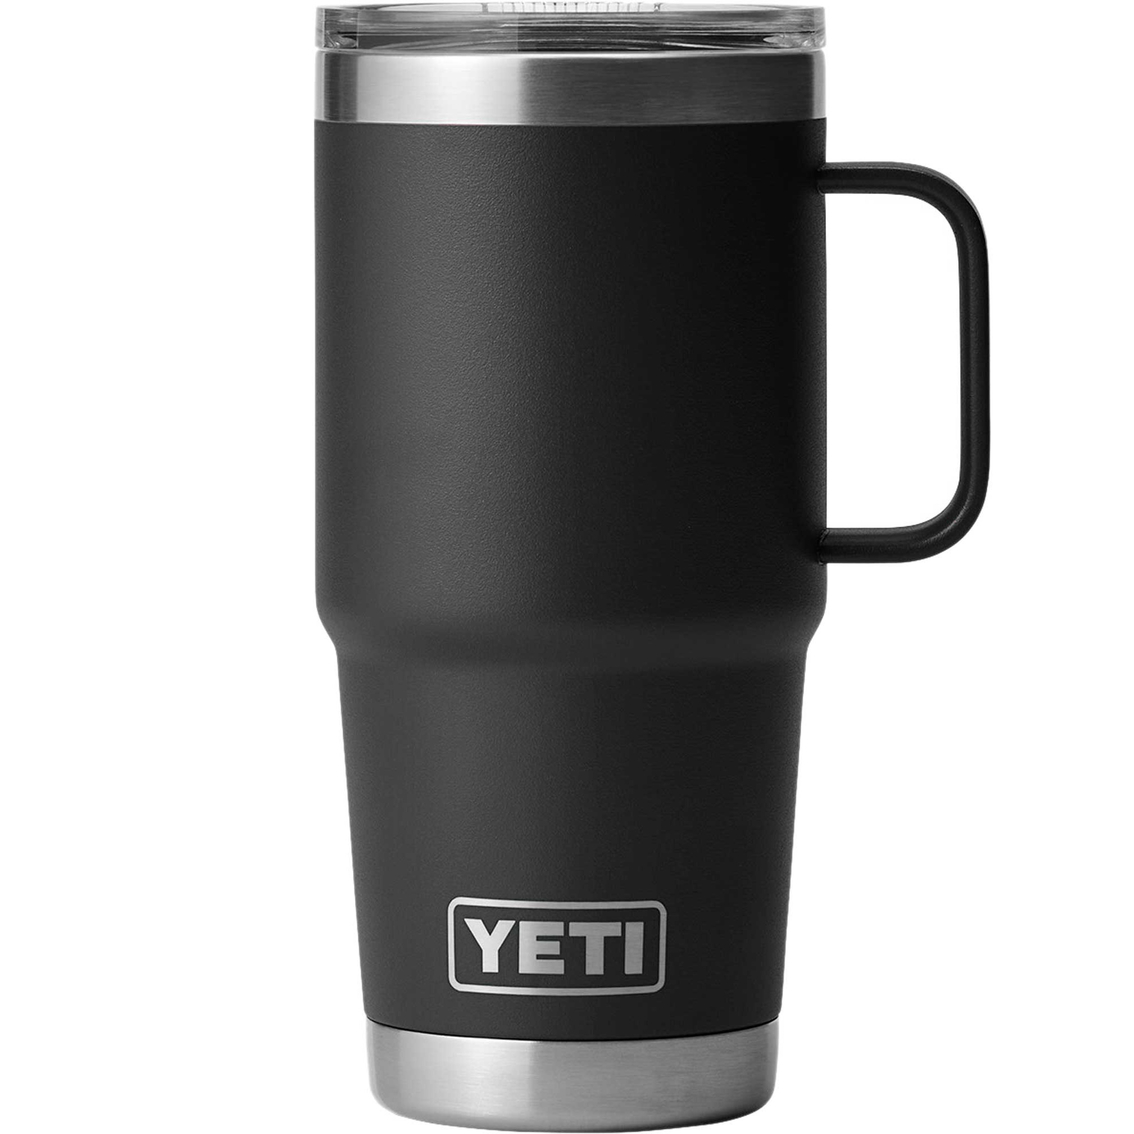 Yeti Rambler 20 Oz. Travel Mug With Stronghold Lid, Travel Mugs, Sports &  Outdoors